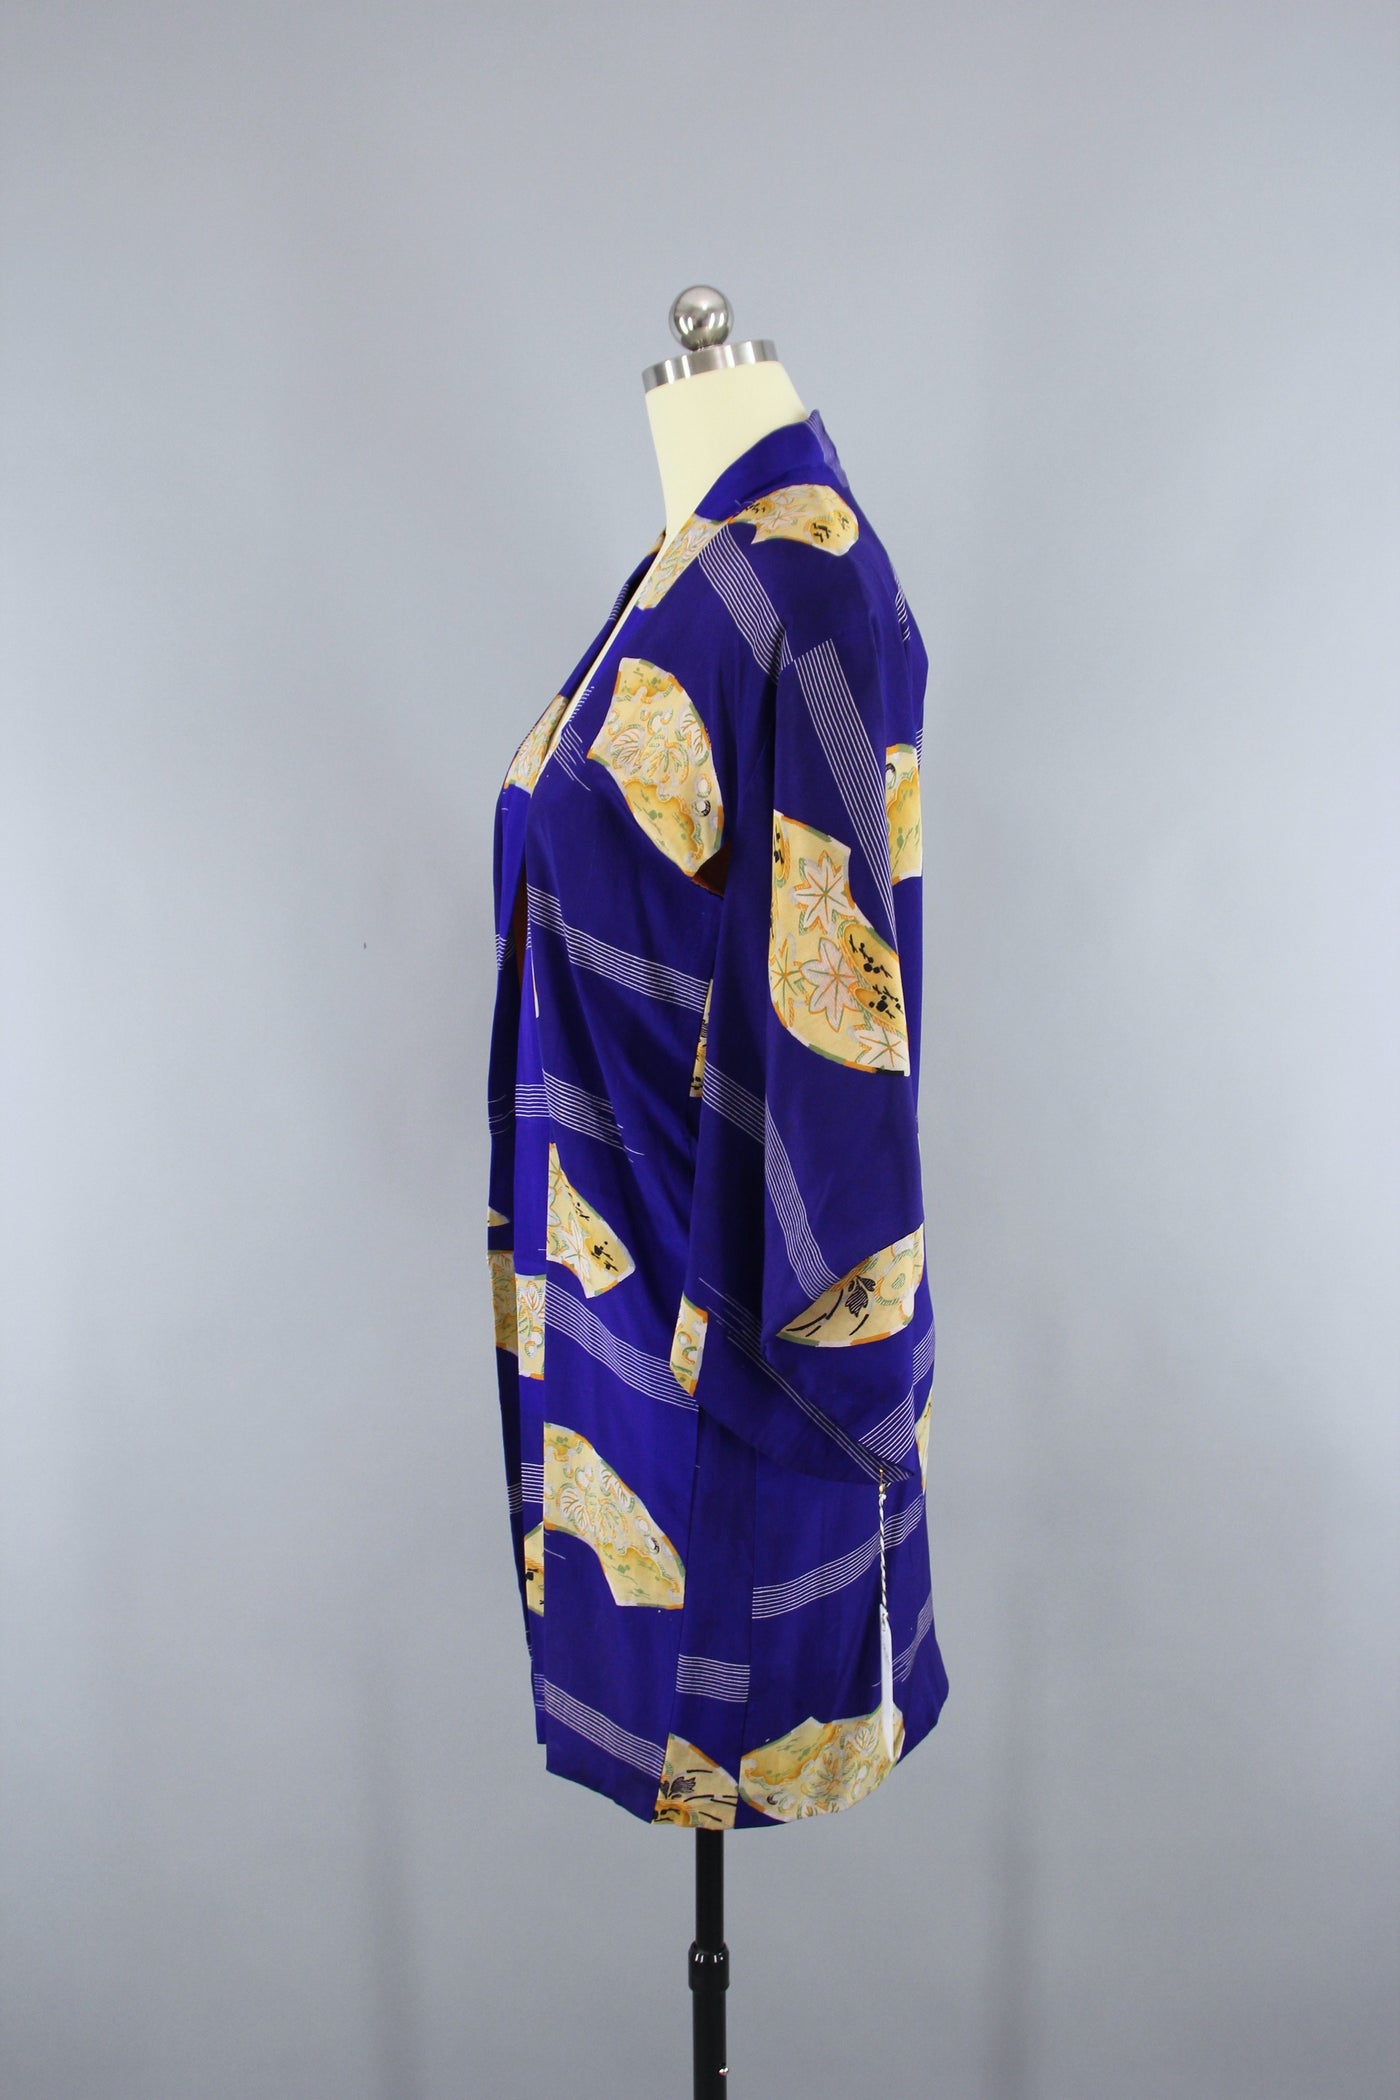 1940s Vintage Silk Haori Kimono Jacket Cardigan with Royal Blue Fans Print - ThisBlueBird